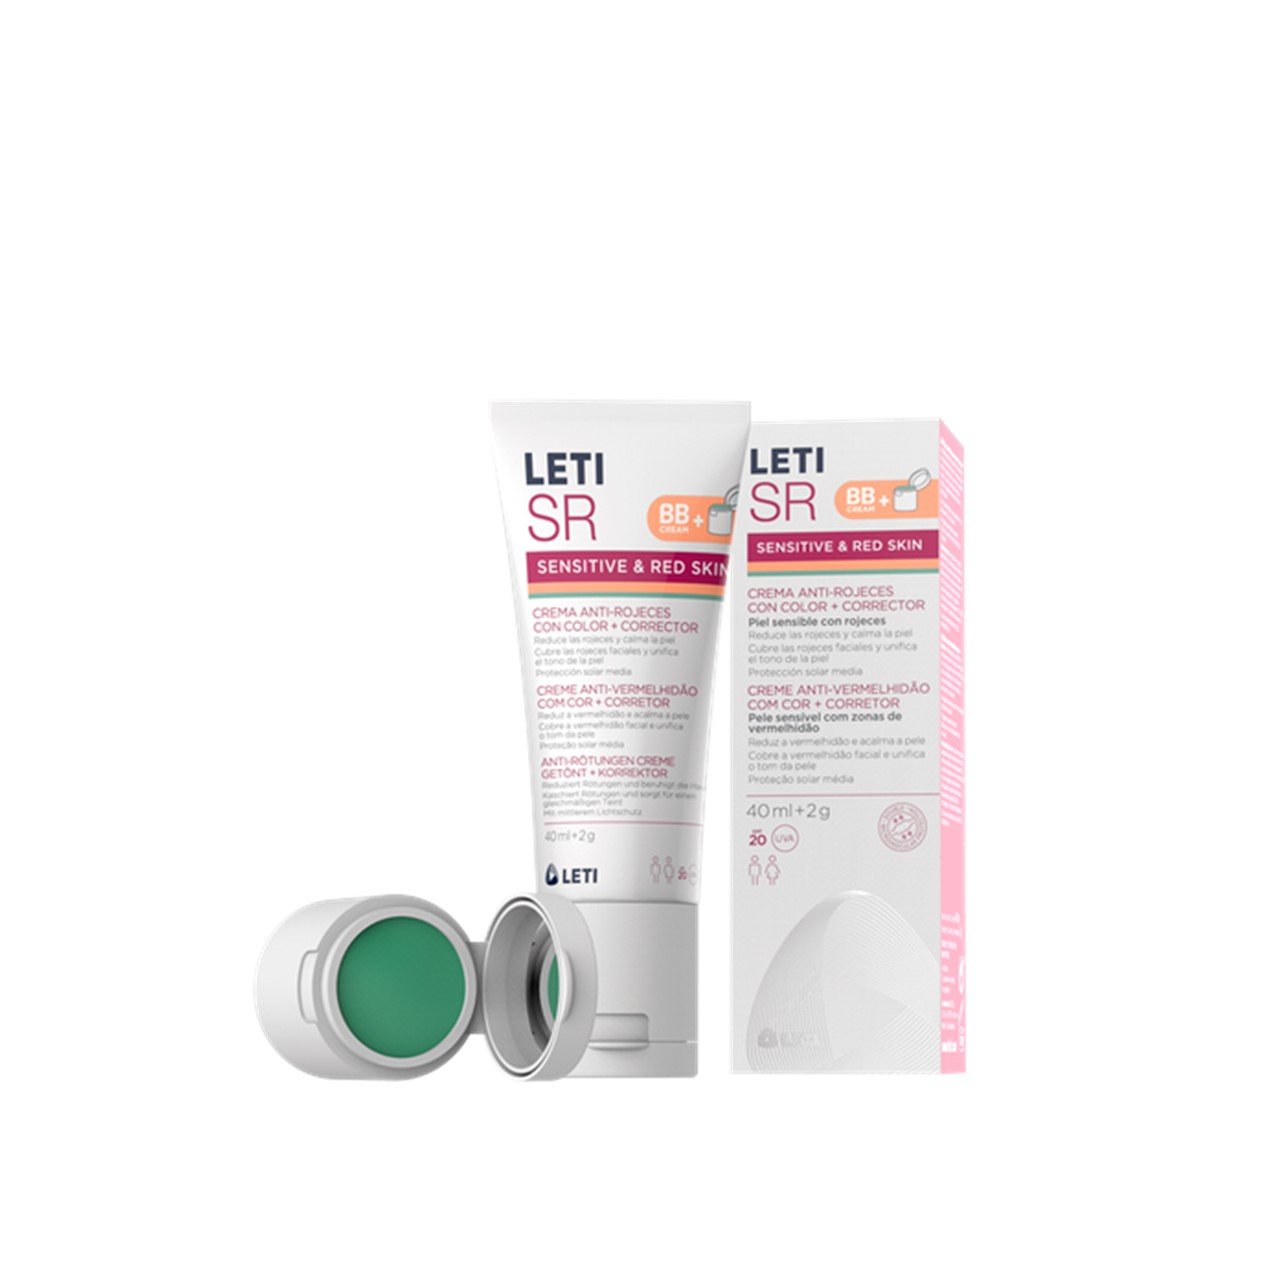 LETI SR Sensitive & Red Skin BB Cream + Corrector SPF20 40ml (1.35fl oz)